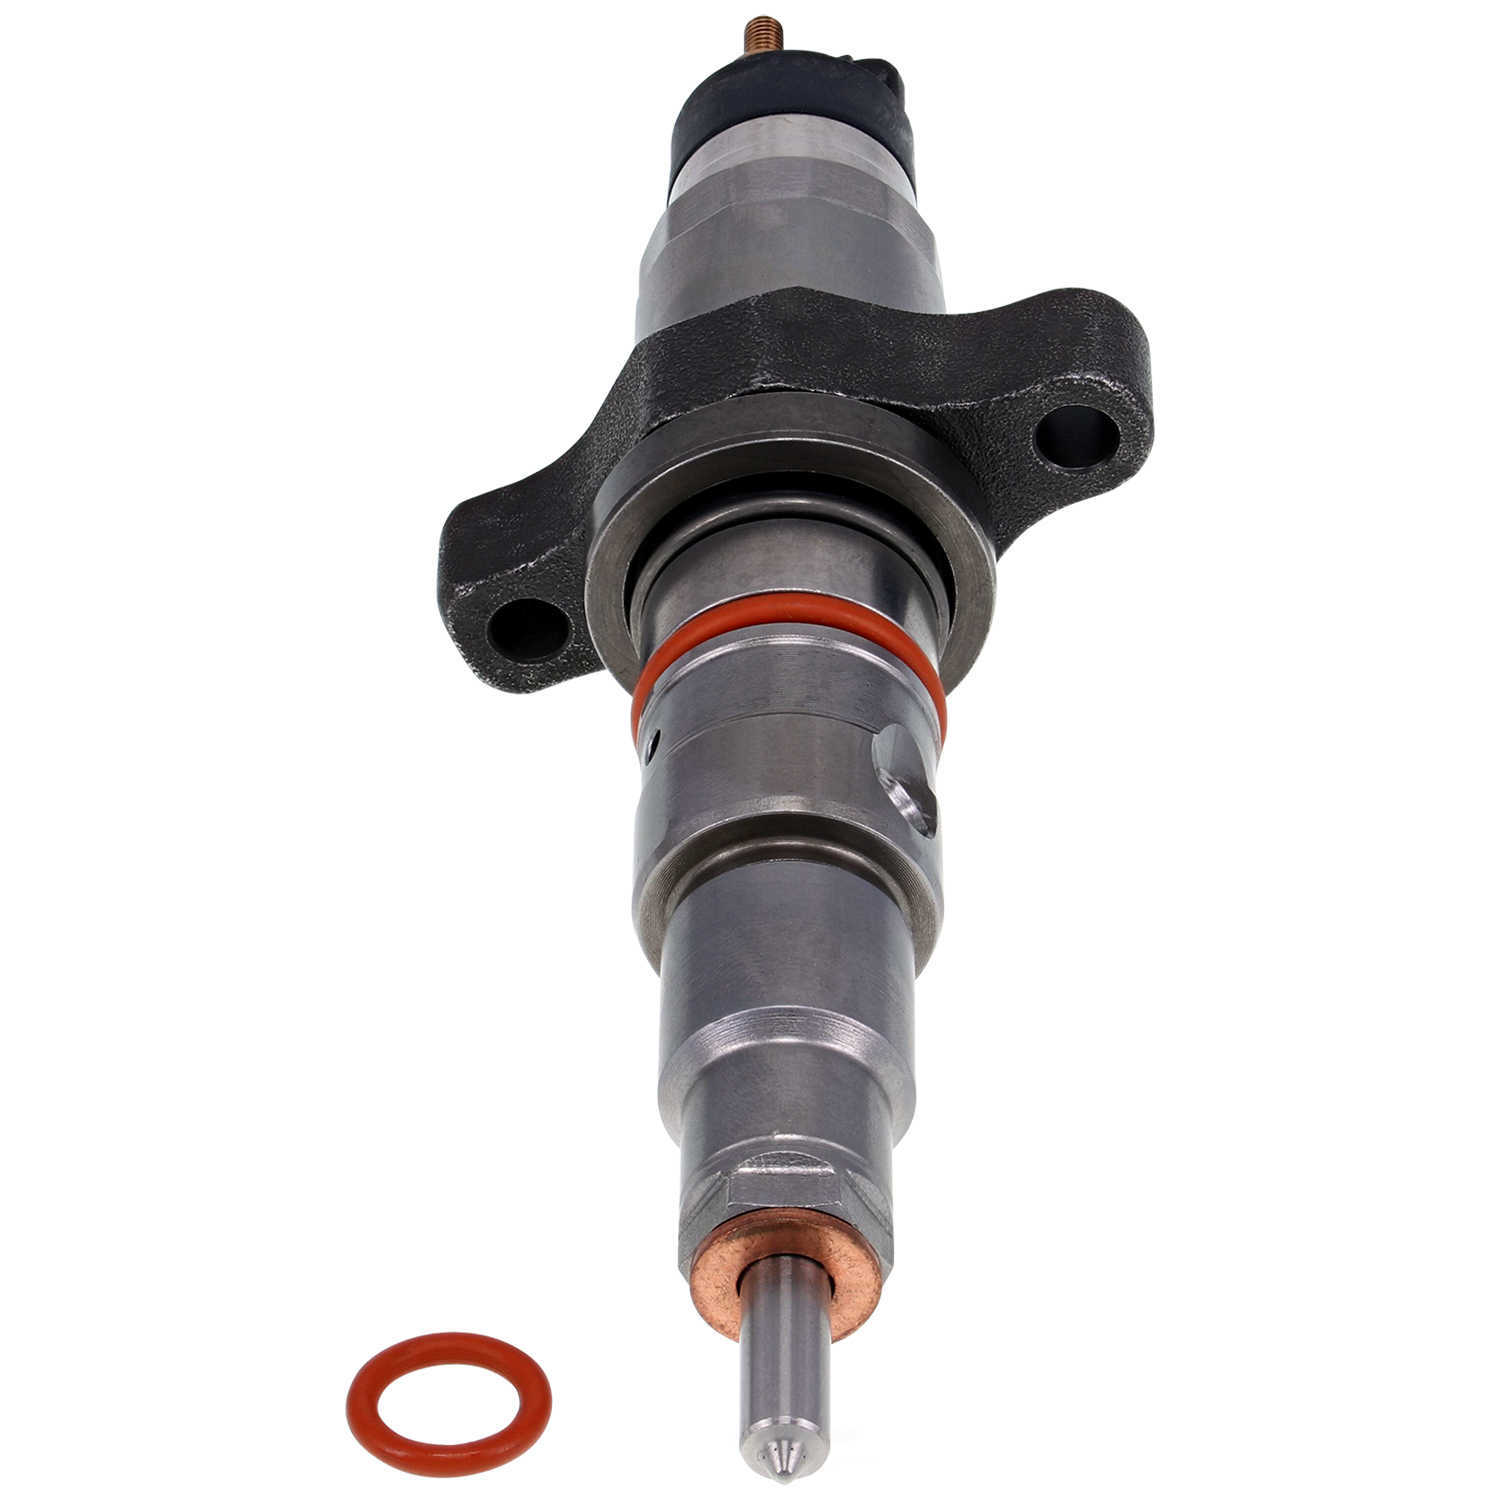 GB REMANUFACTURING INC. - Reman Diesel Fuel Injector - GBR 712-501